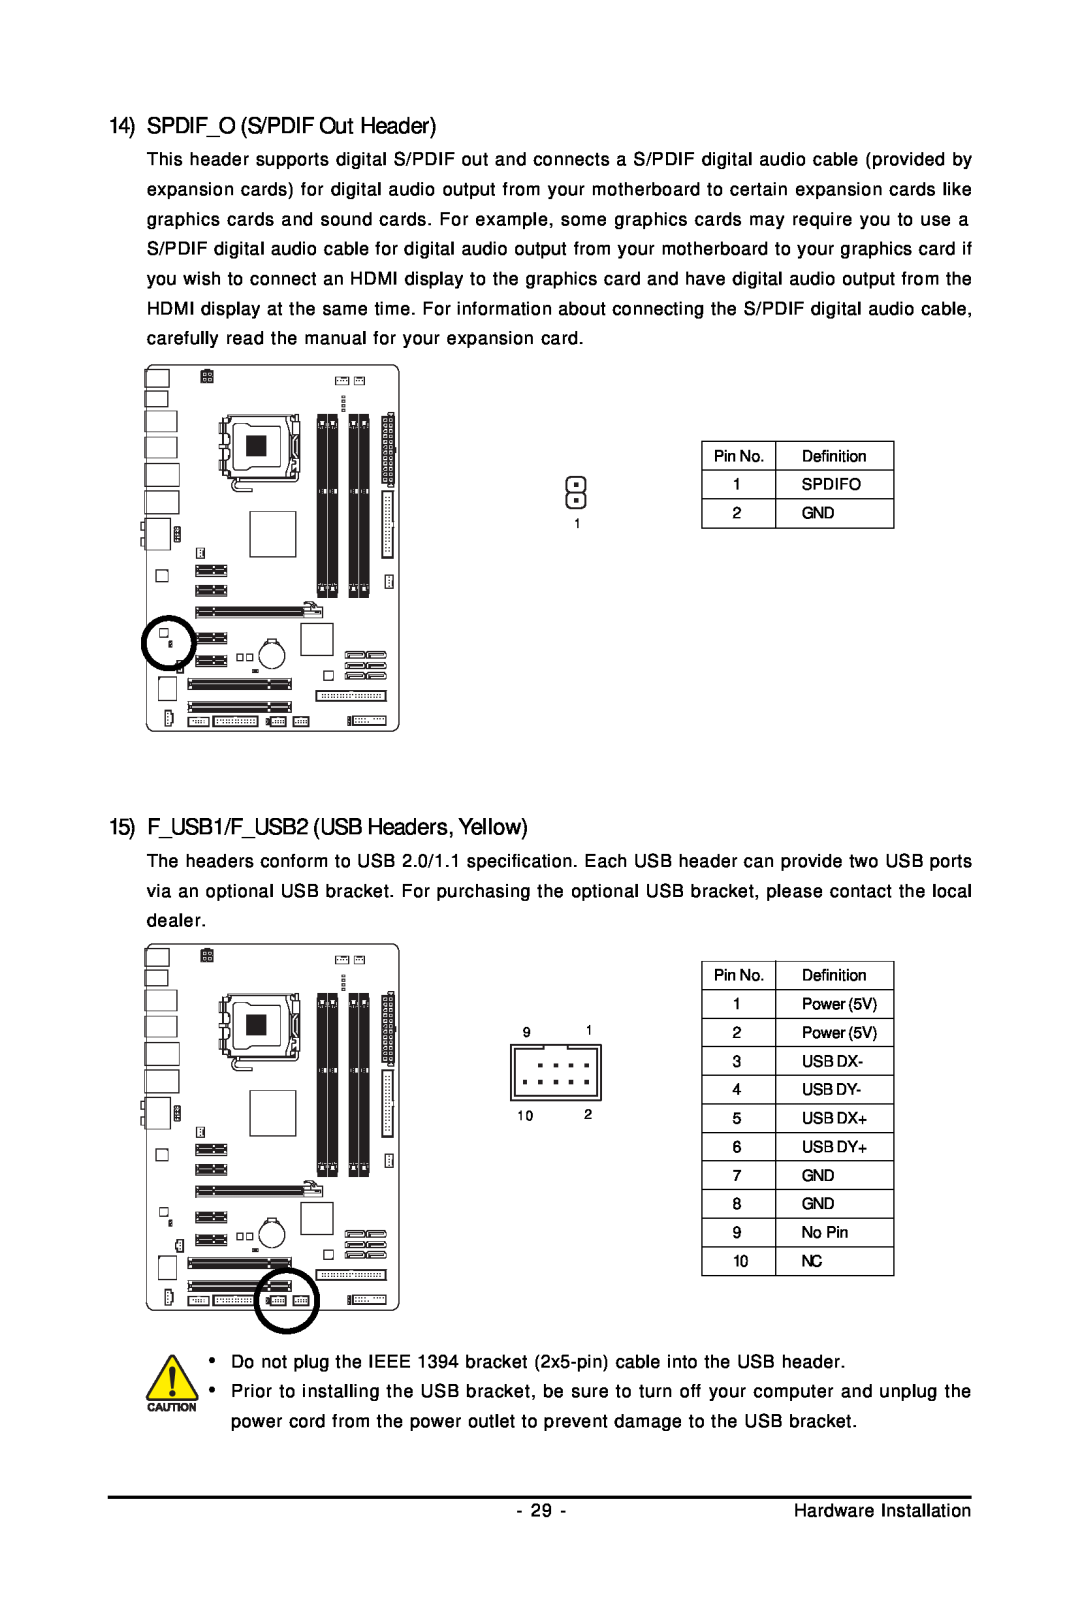 Gigabyte GA-EP45-UD3LR user manual SPDIFO S/PDIF Out Header, FUSB1/FUSB2 USB Headers, Yellow 